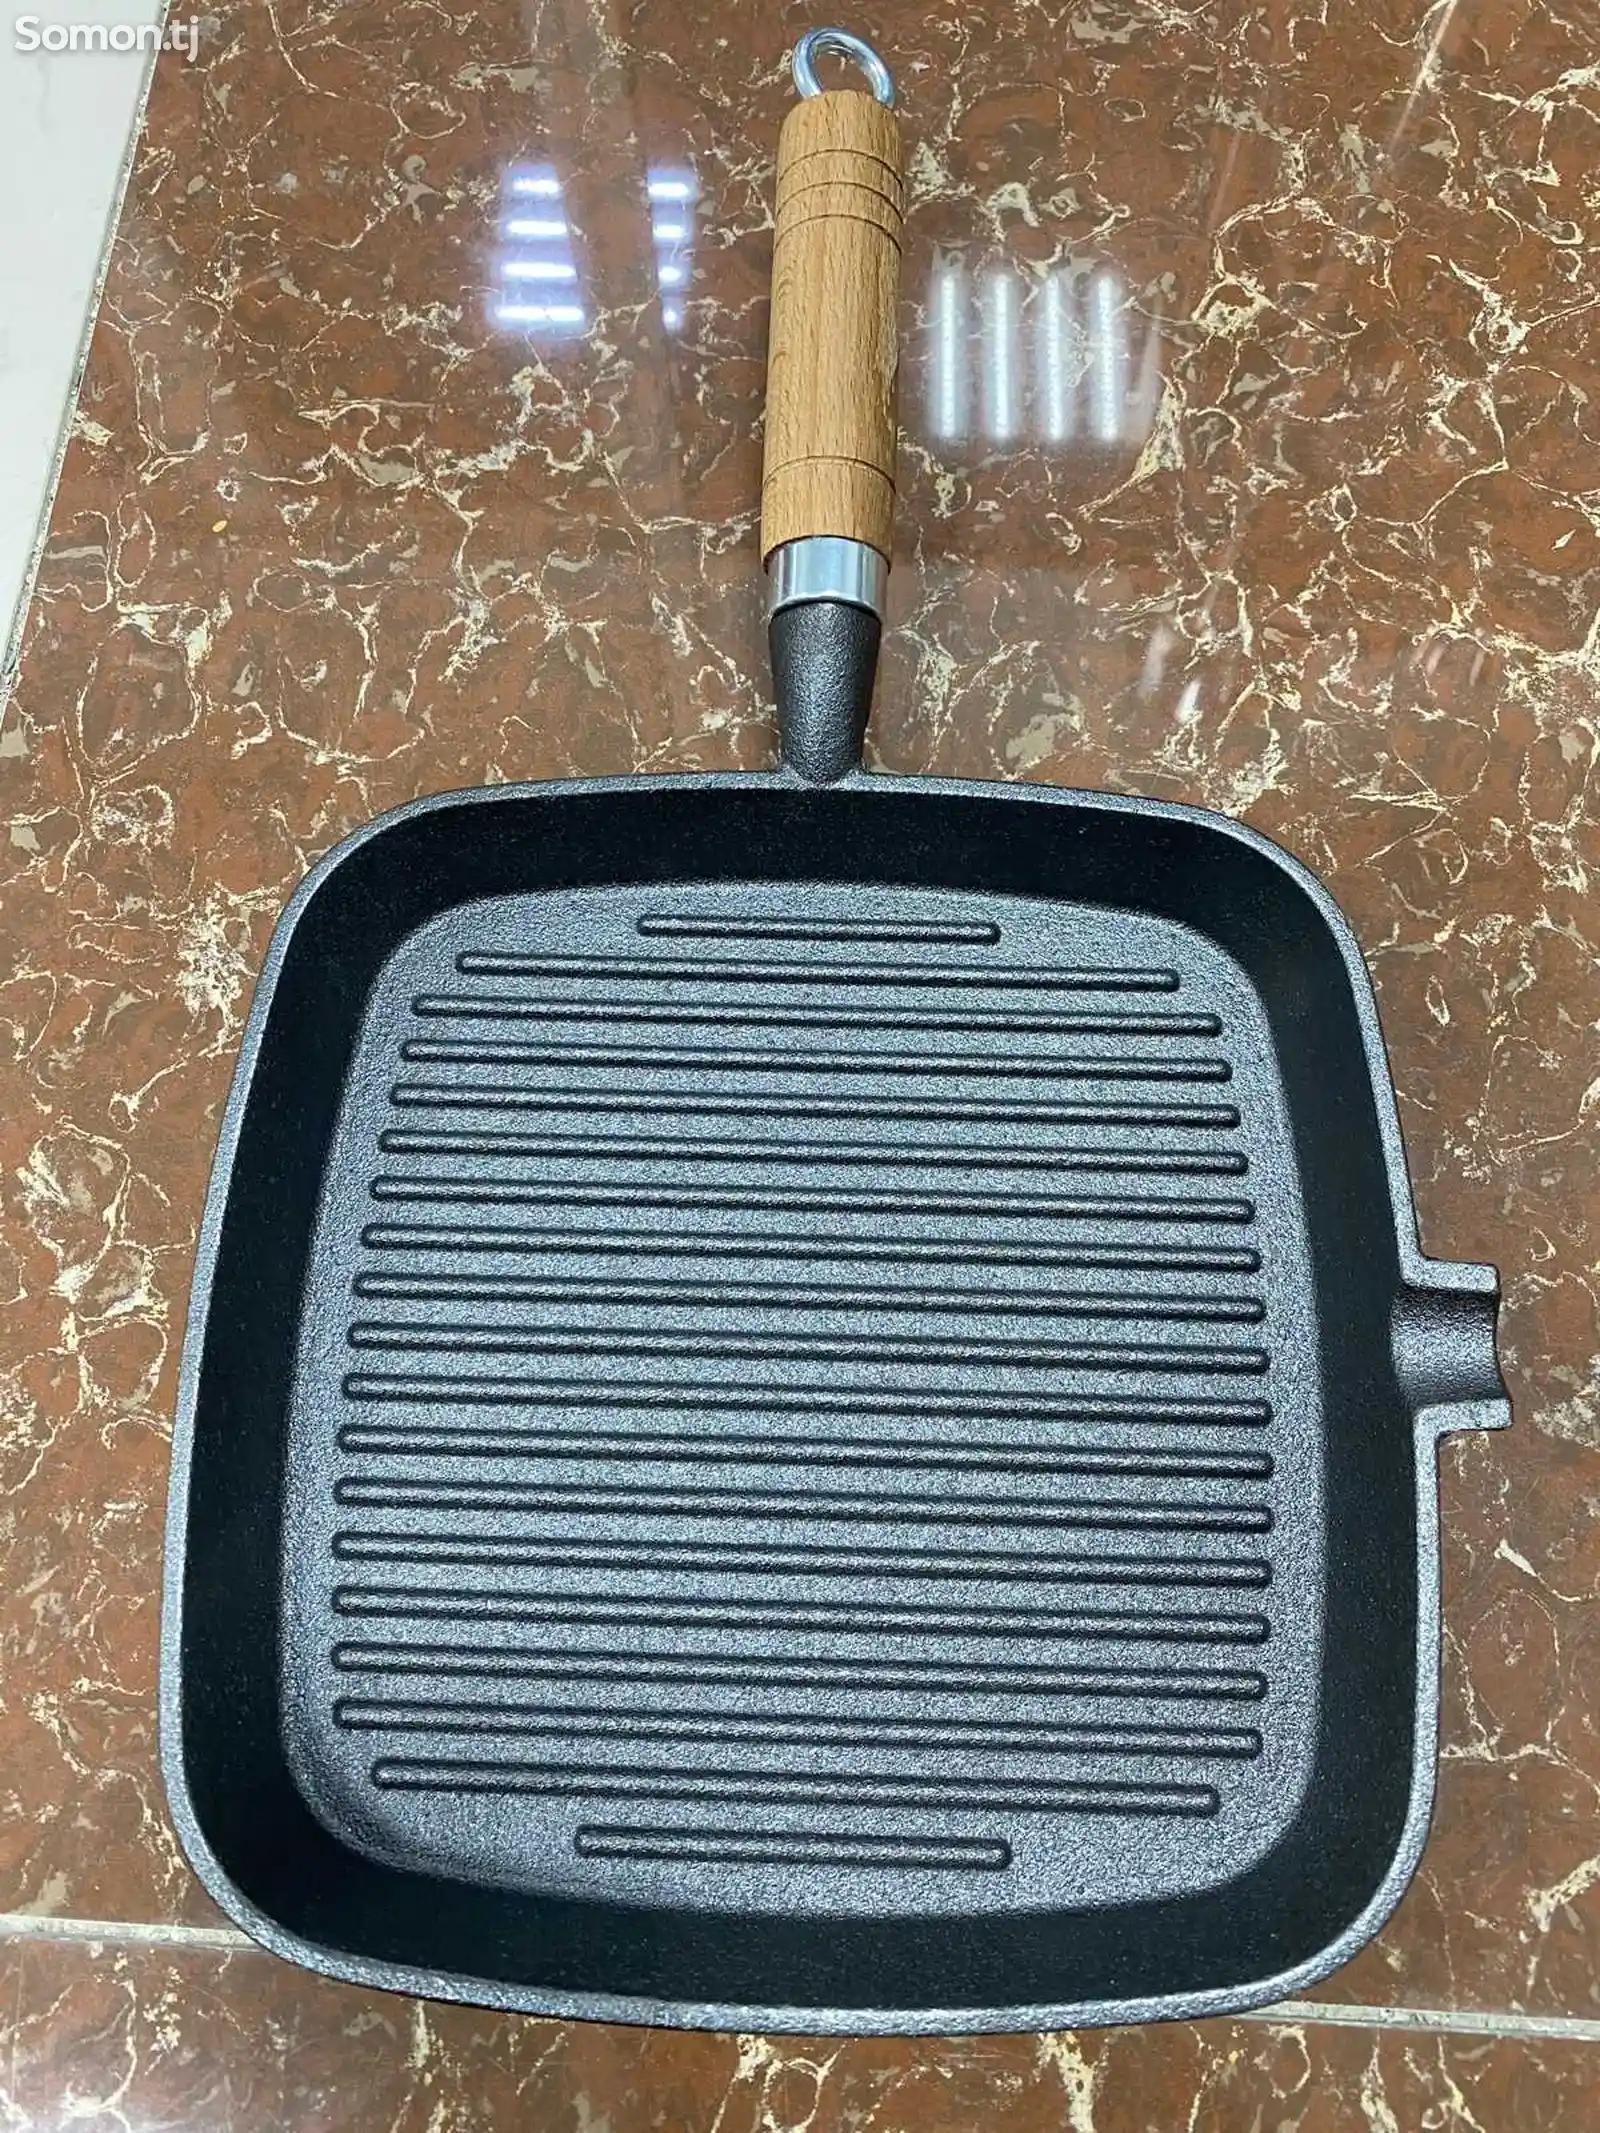 Сковородка для стейков-1